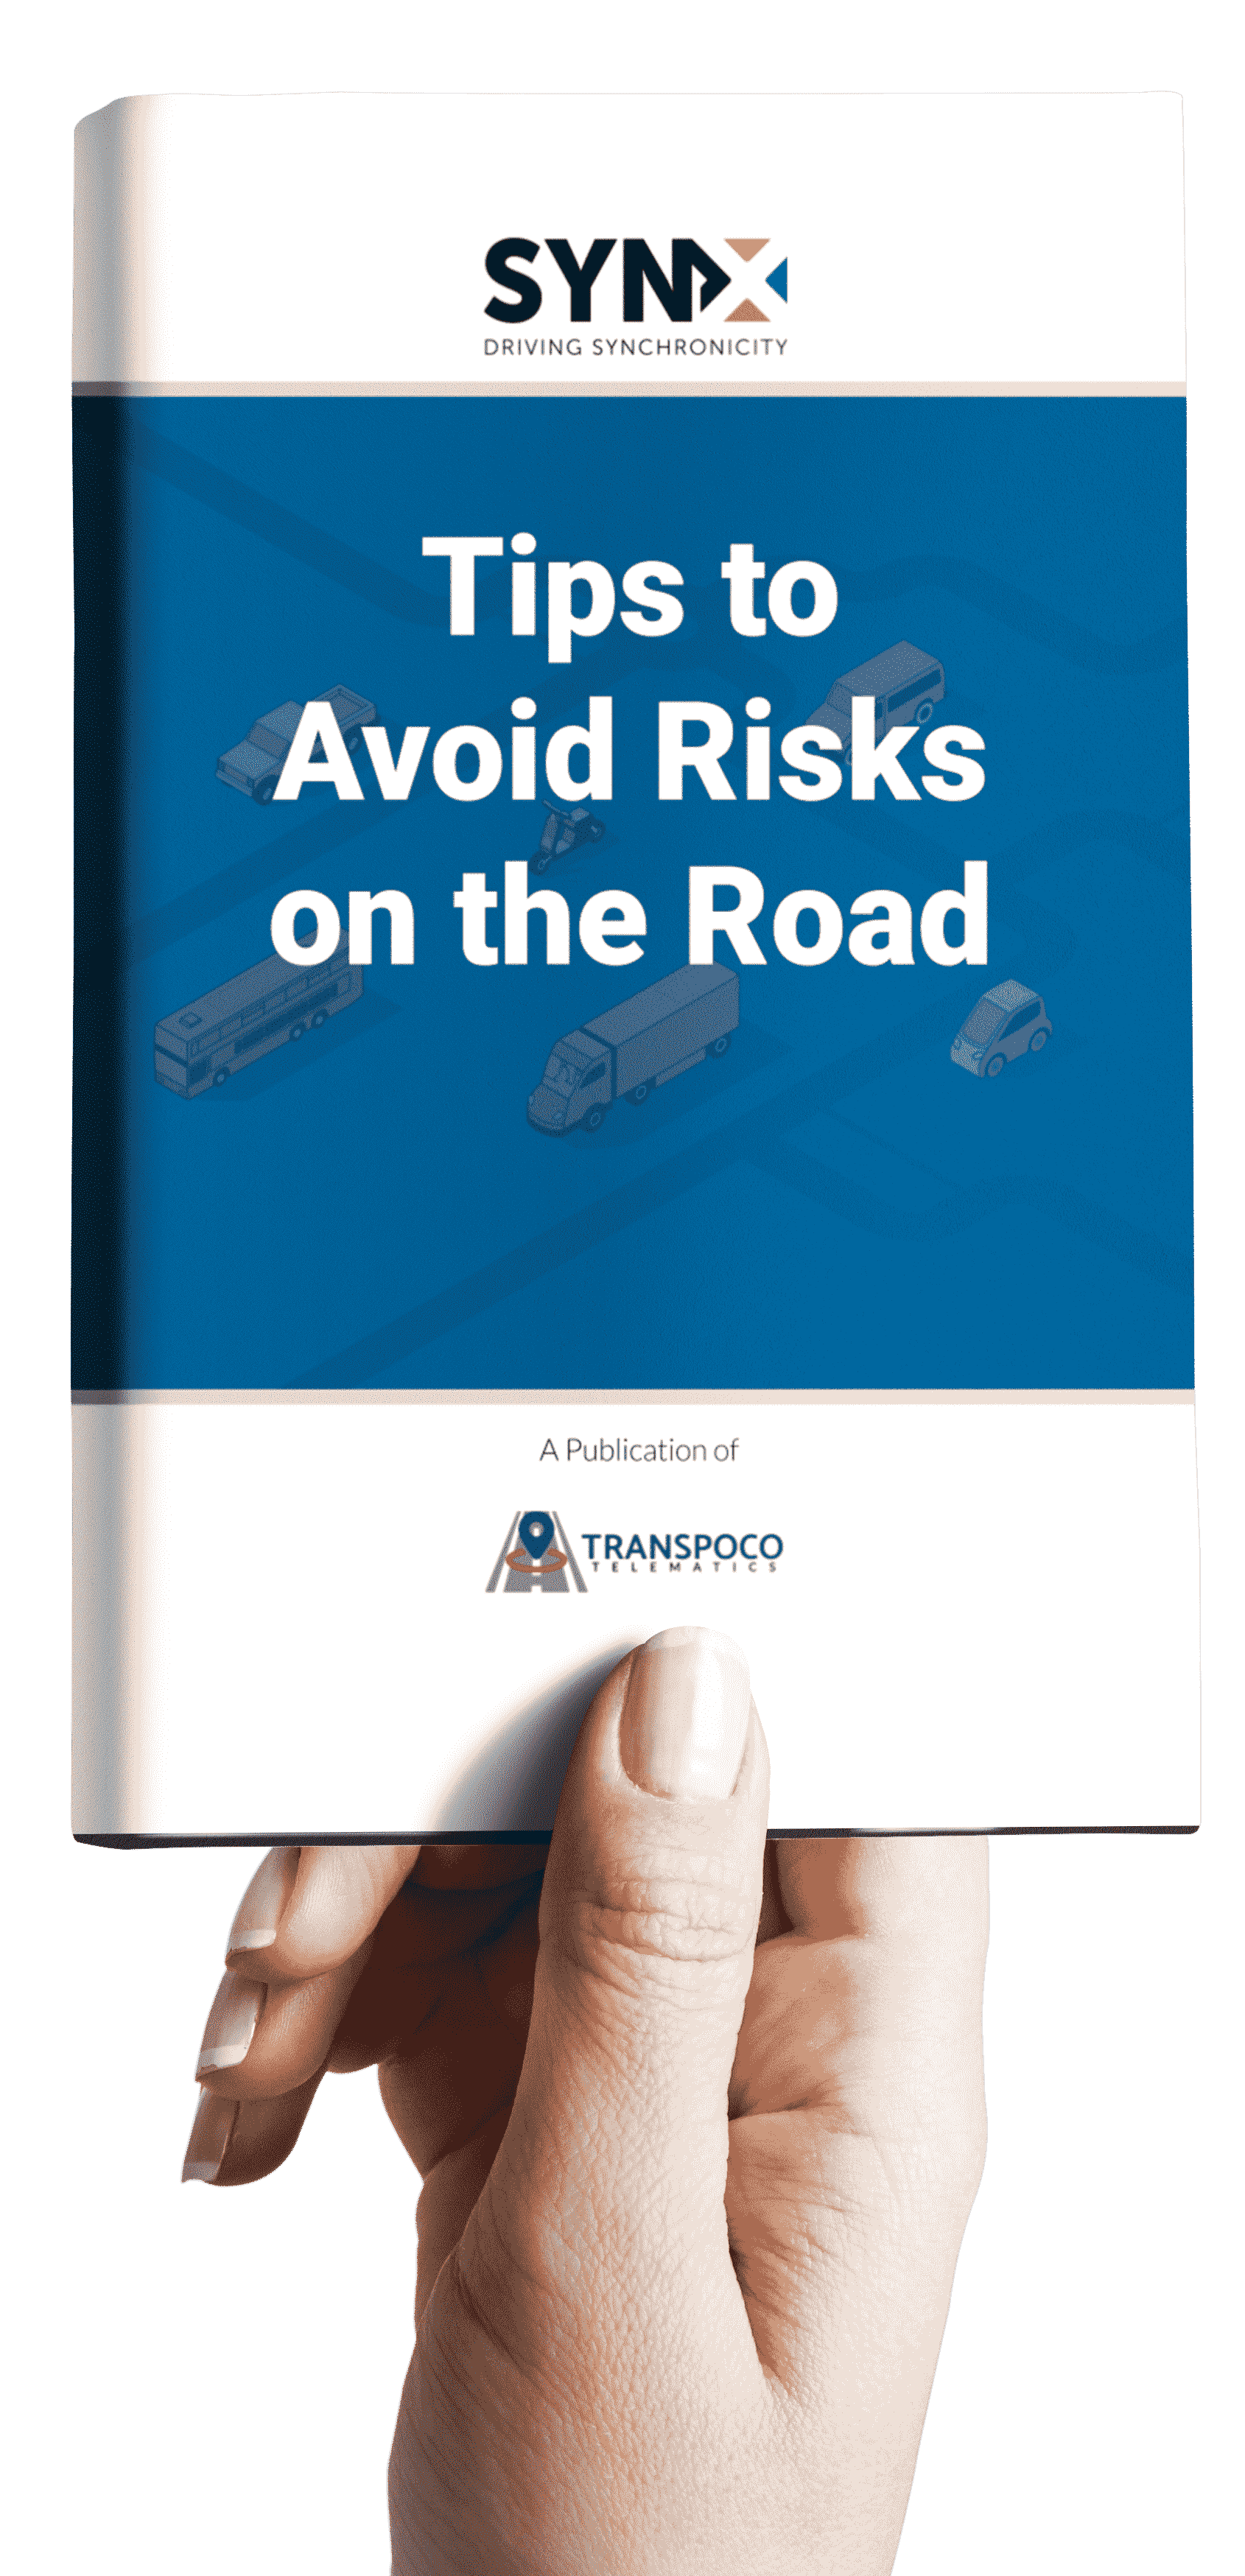 eBook_Tips to avoid risks on the road_EN - MOCKUP